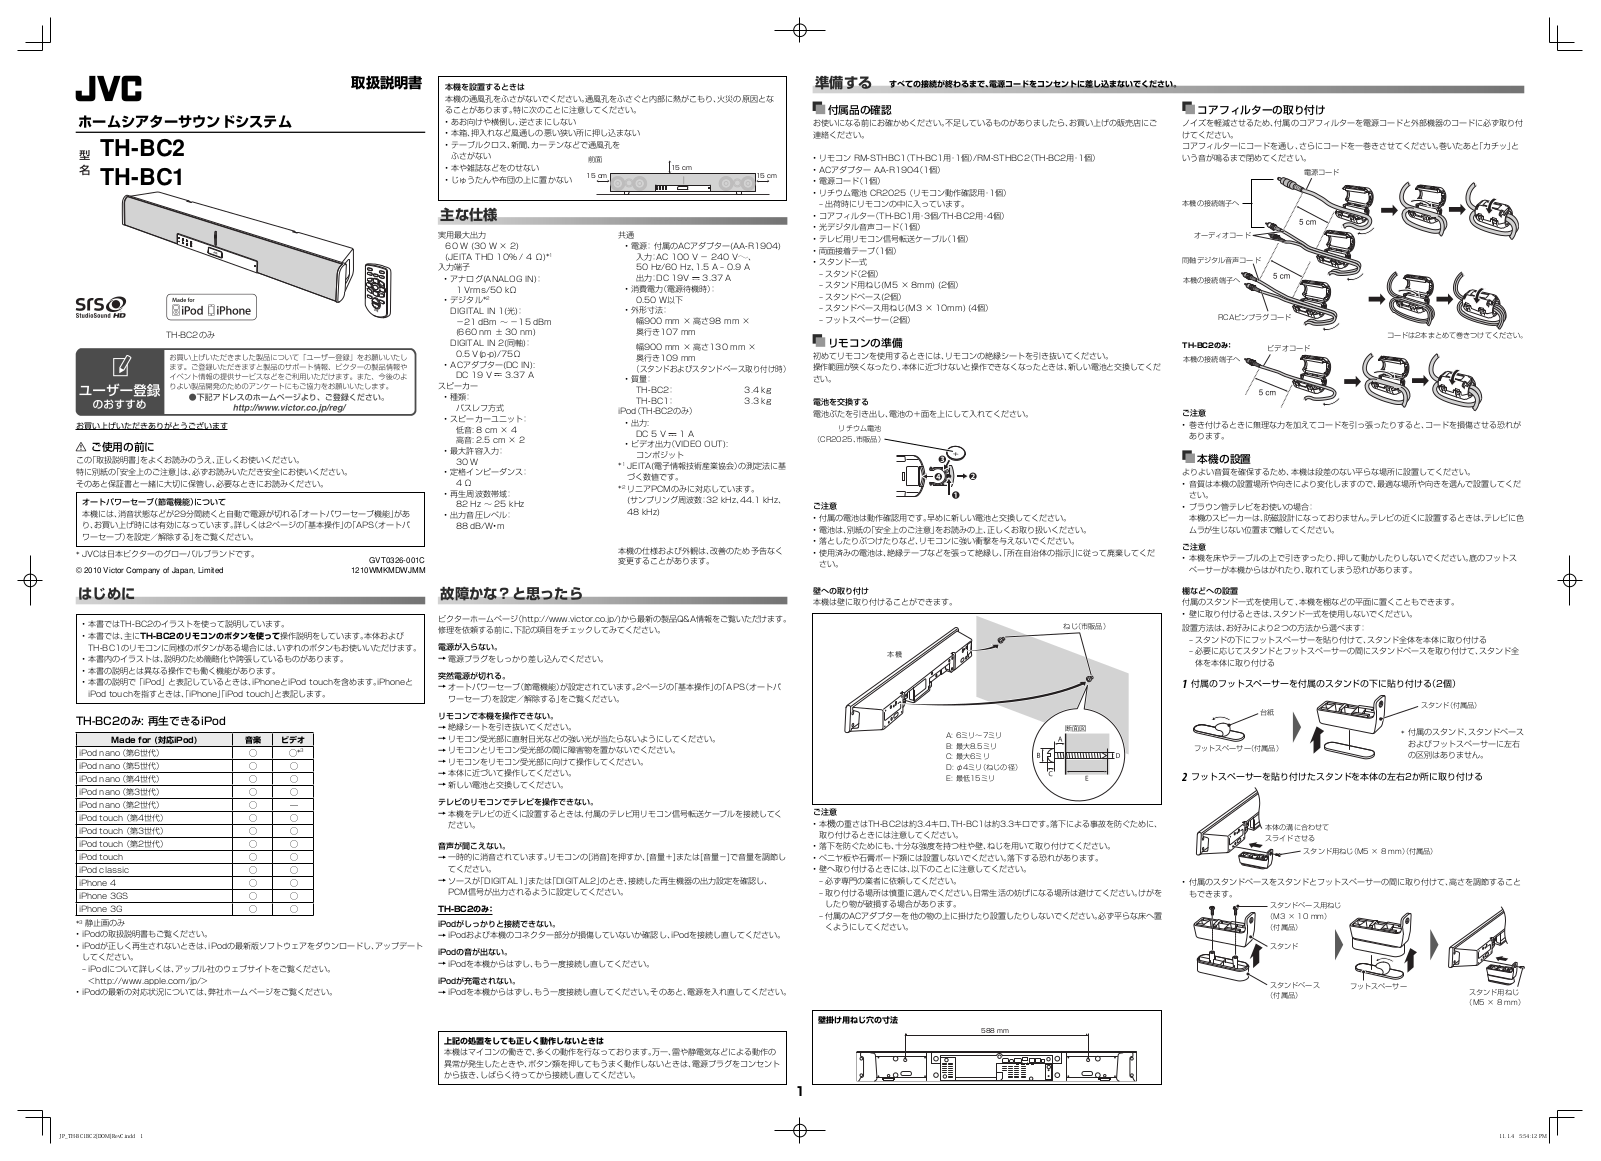 JVC TH-BC2, TH-BC1 service manual